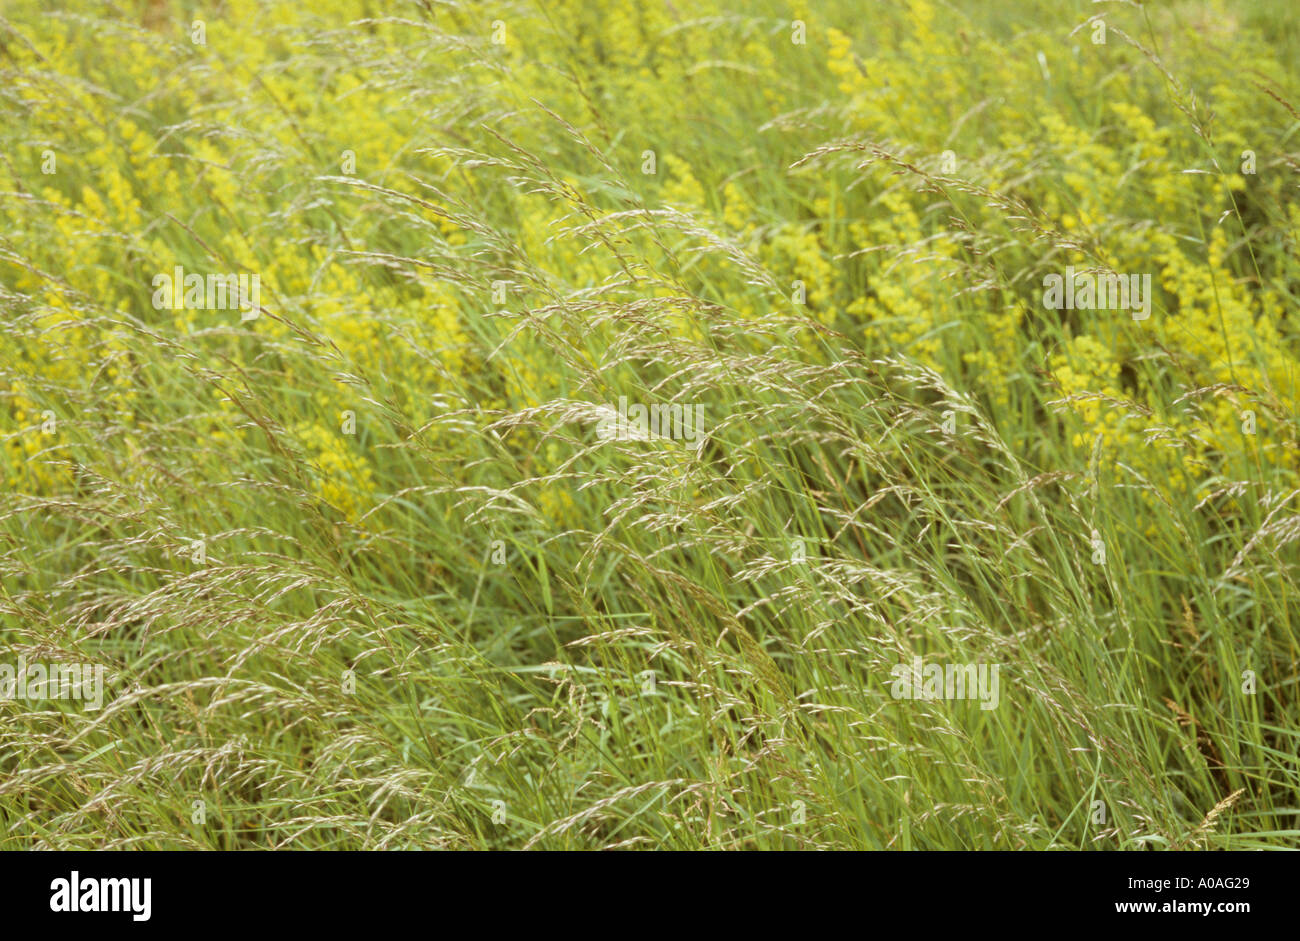 Summer meadow or pasture with Ladys bedstraw or Galium verum and False oat grass or Arrhenartherum elatius Stock Photo